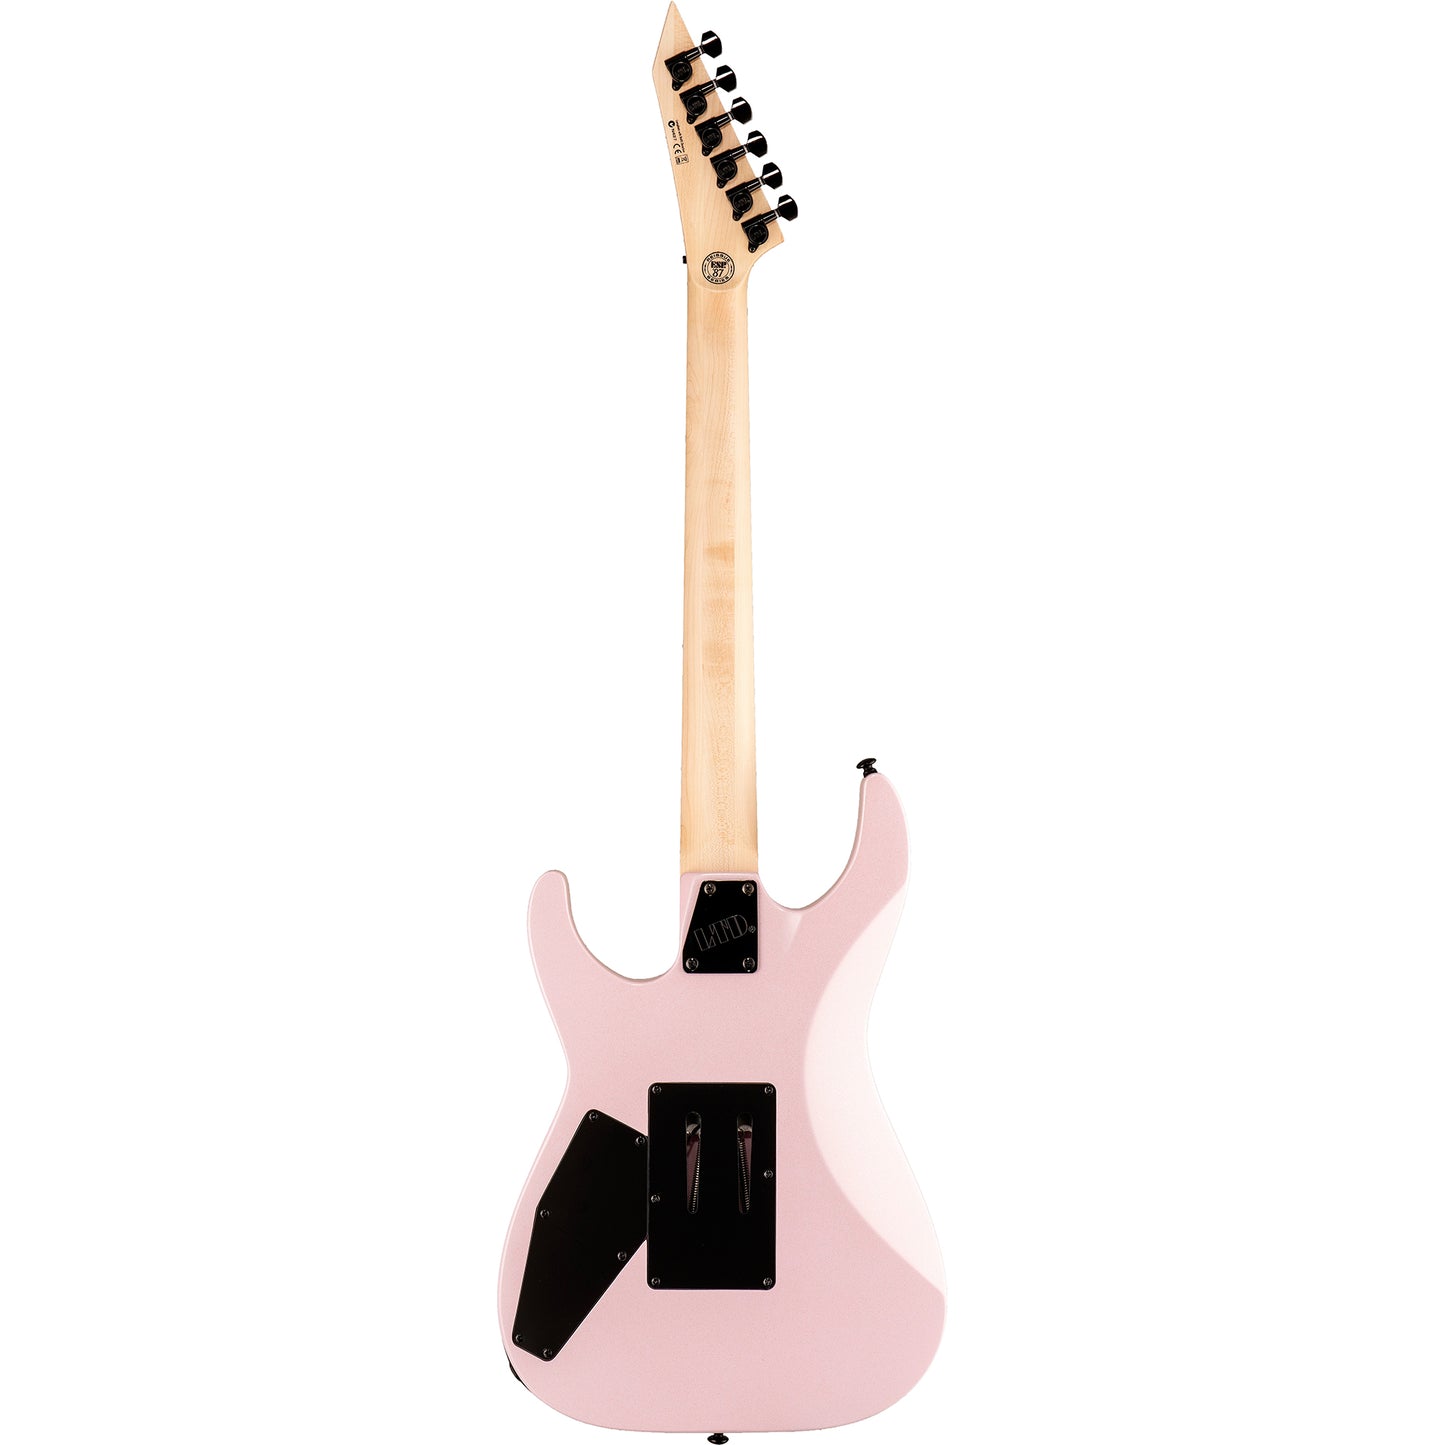 ESP LTD Mirage Deluxe ‘87 Electric Guitar, Pearl Pink